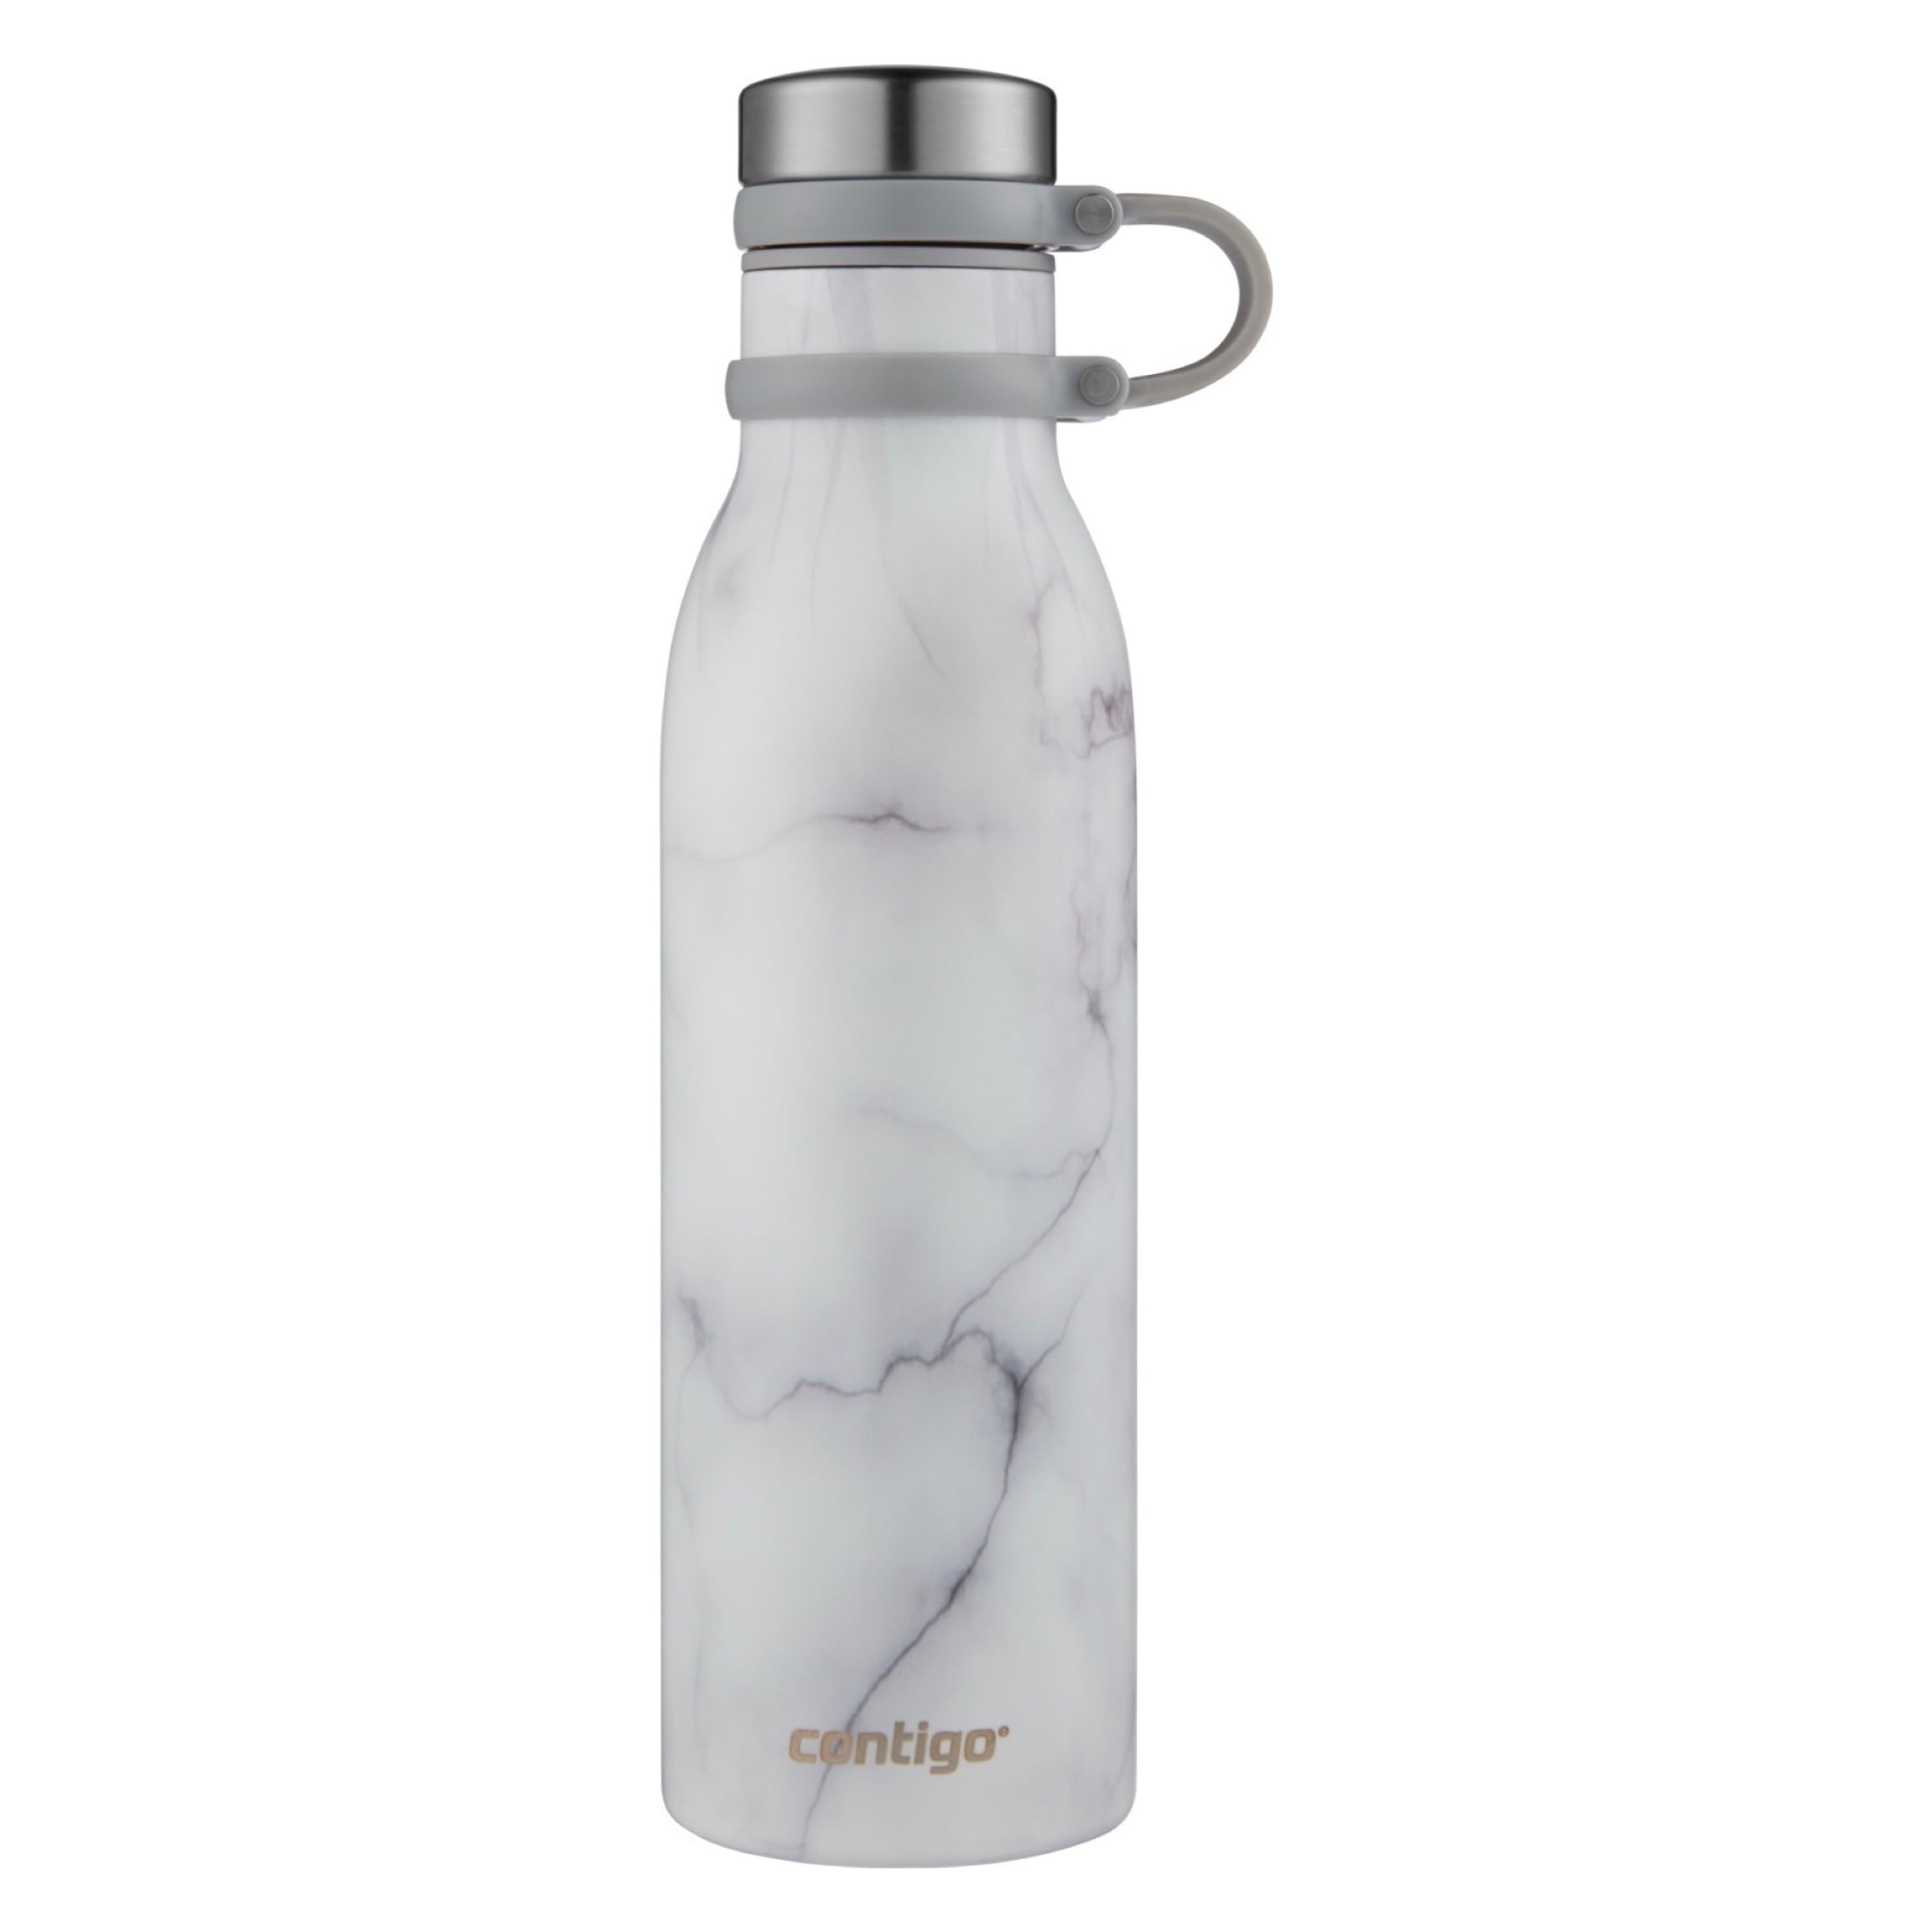 Contigo Couture Matterhorn Stainless Steel Water Bottle - White Marble, 1  ct - Kroger